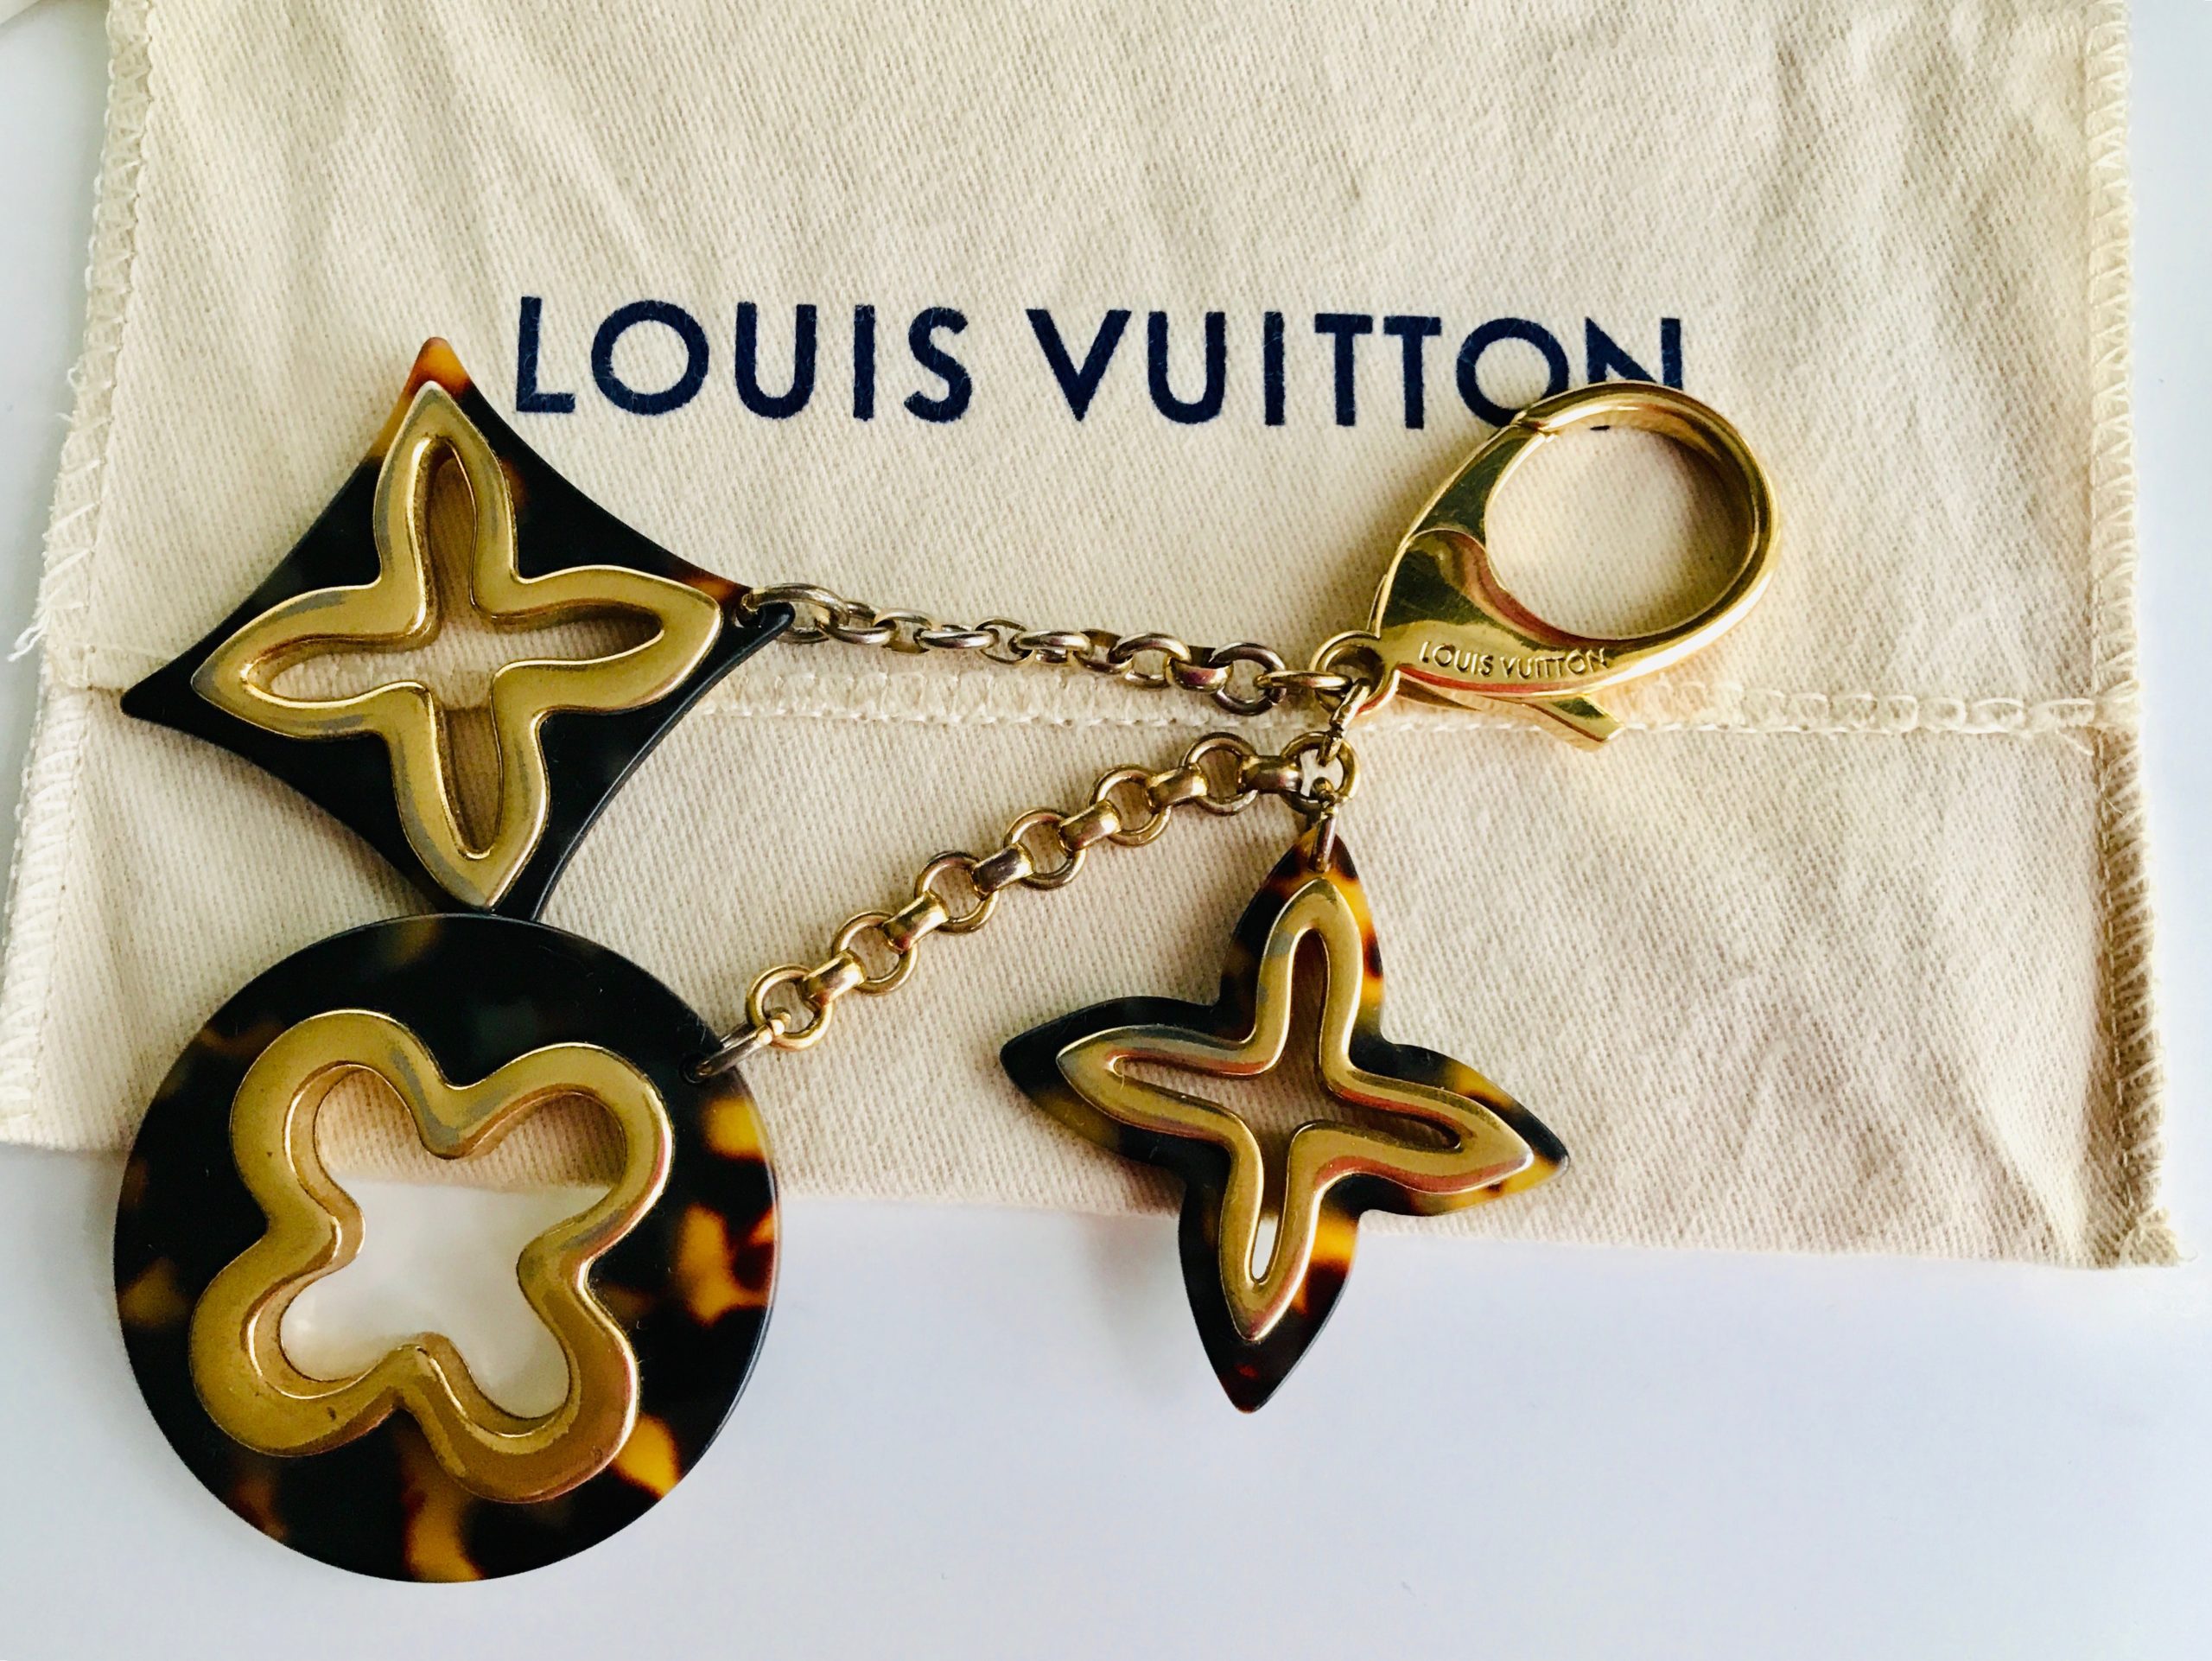 LOUIS VUITTON Bijoux Sac Caprice Bag Charm Gold M65724 62MW935